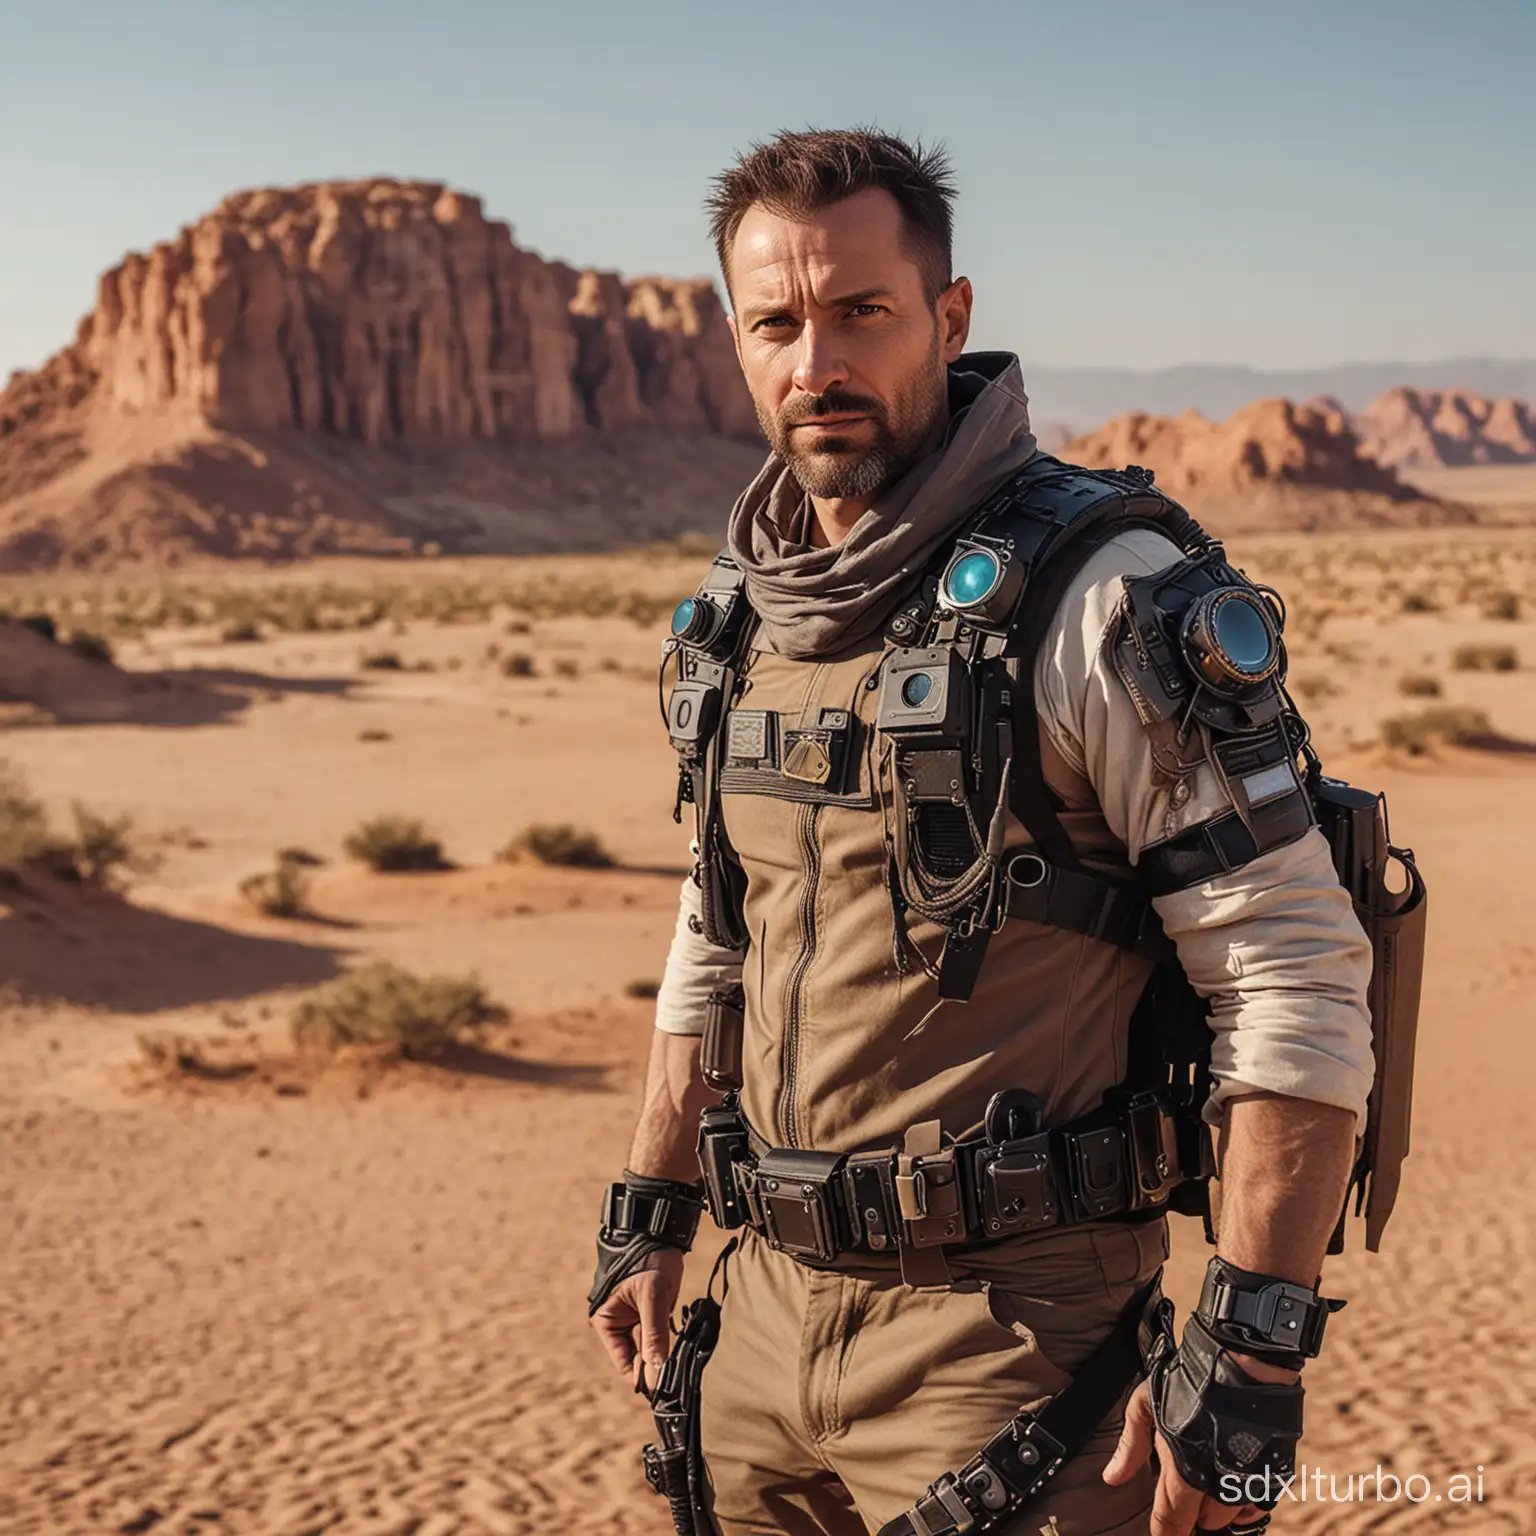 A man 40 year old, dressed as a cyberpunk explorer of the desert